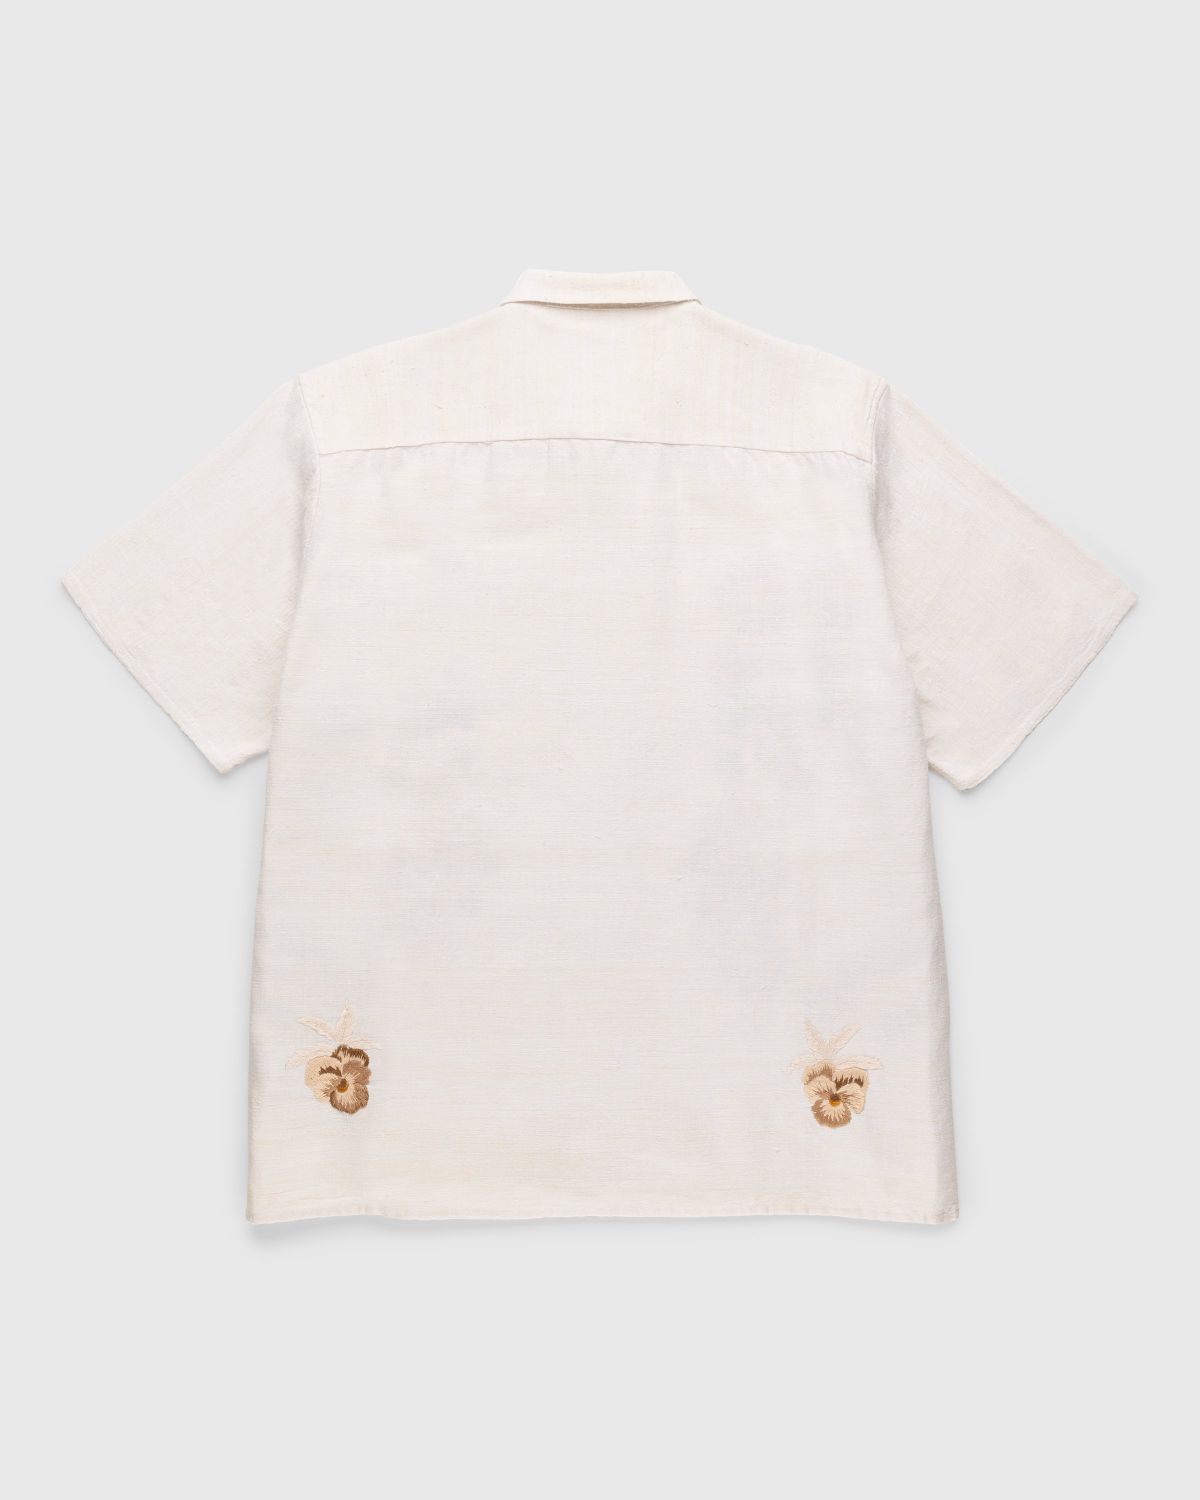 Diomene by Damir Doma – Embroidered Vacation Shirt Cream - Shortsleeve Shirts - White - Image 2